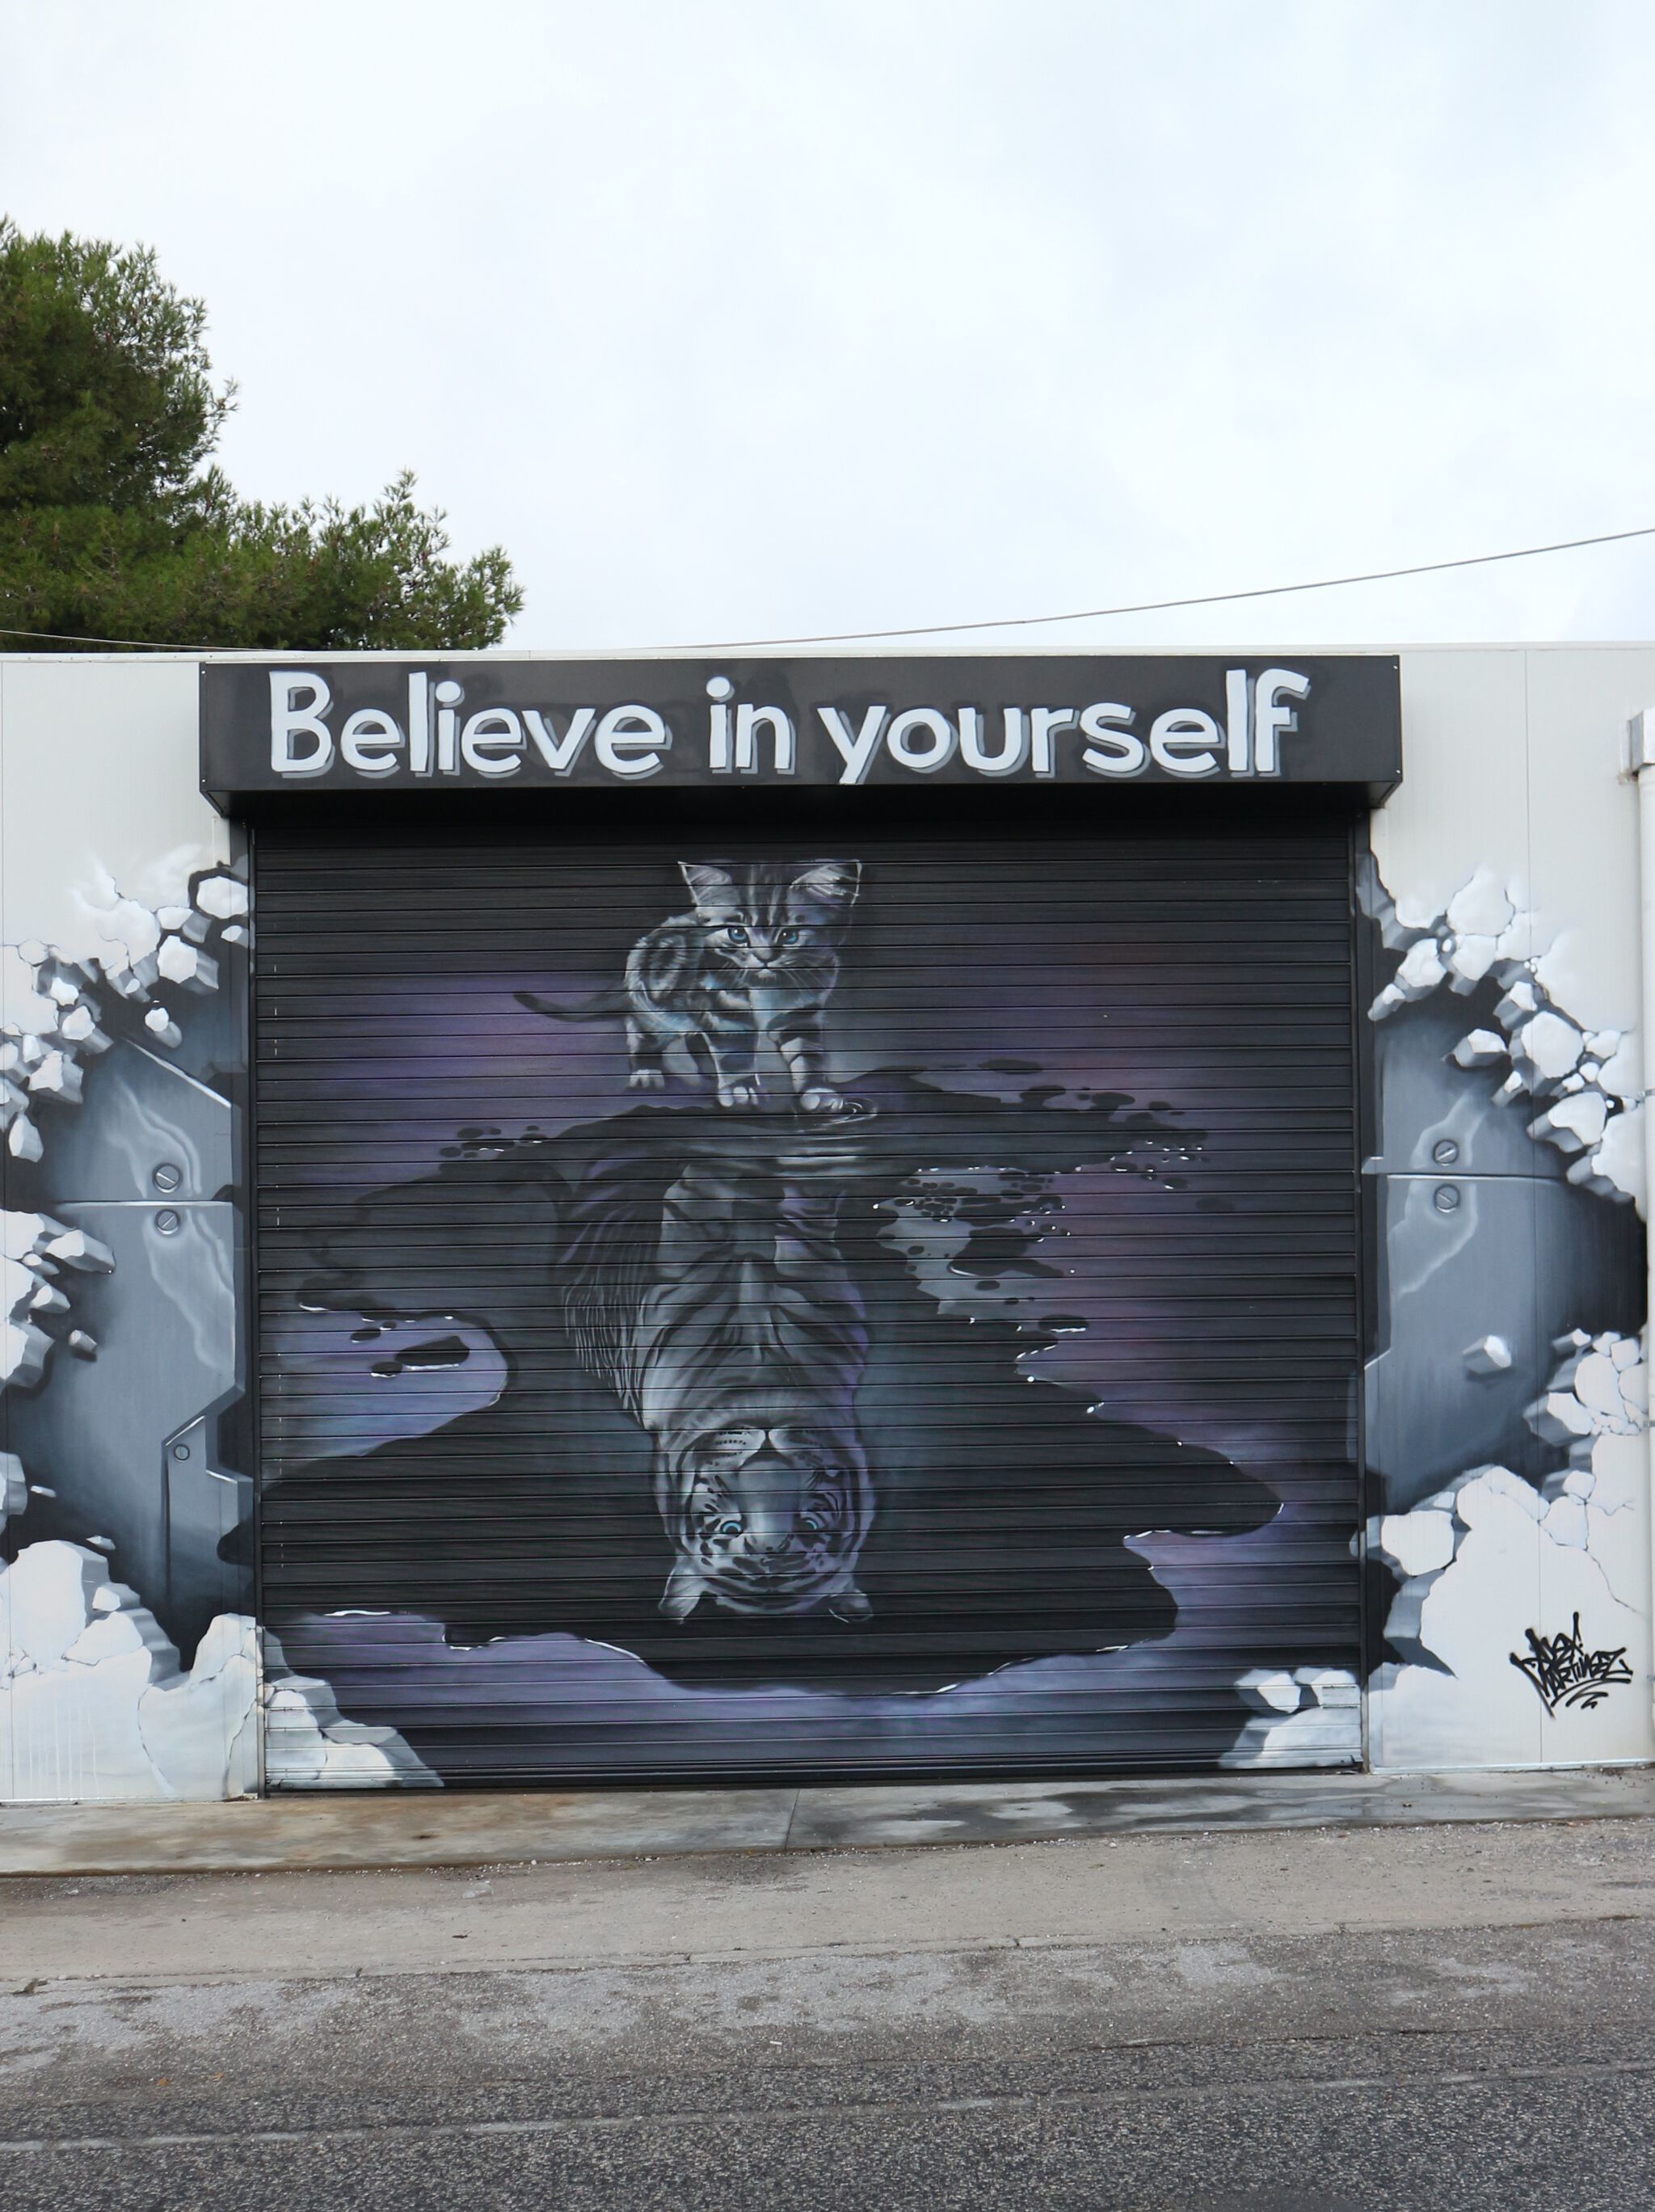 Alex martinez&mdash;Believe in your self